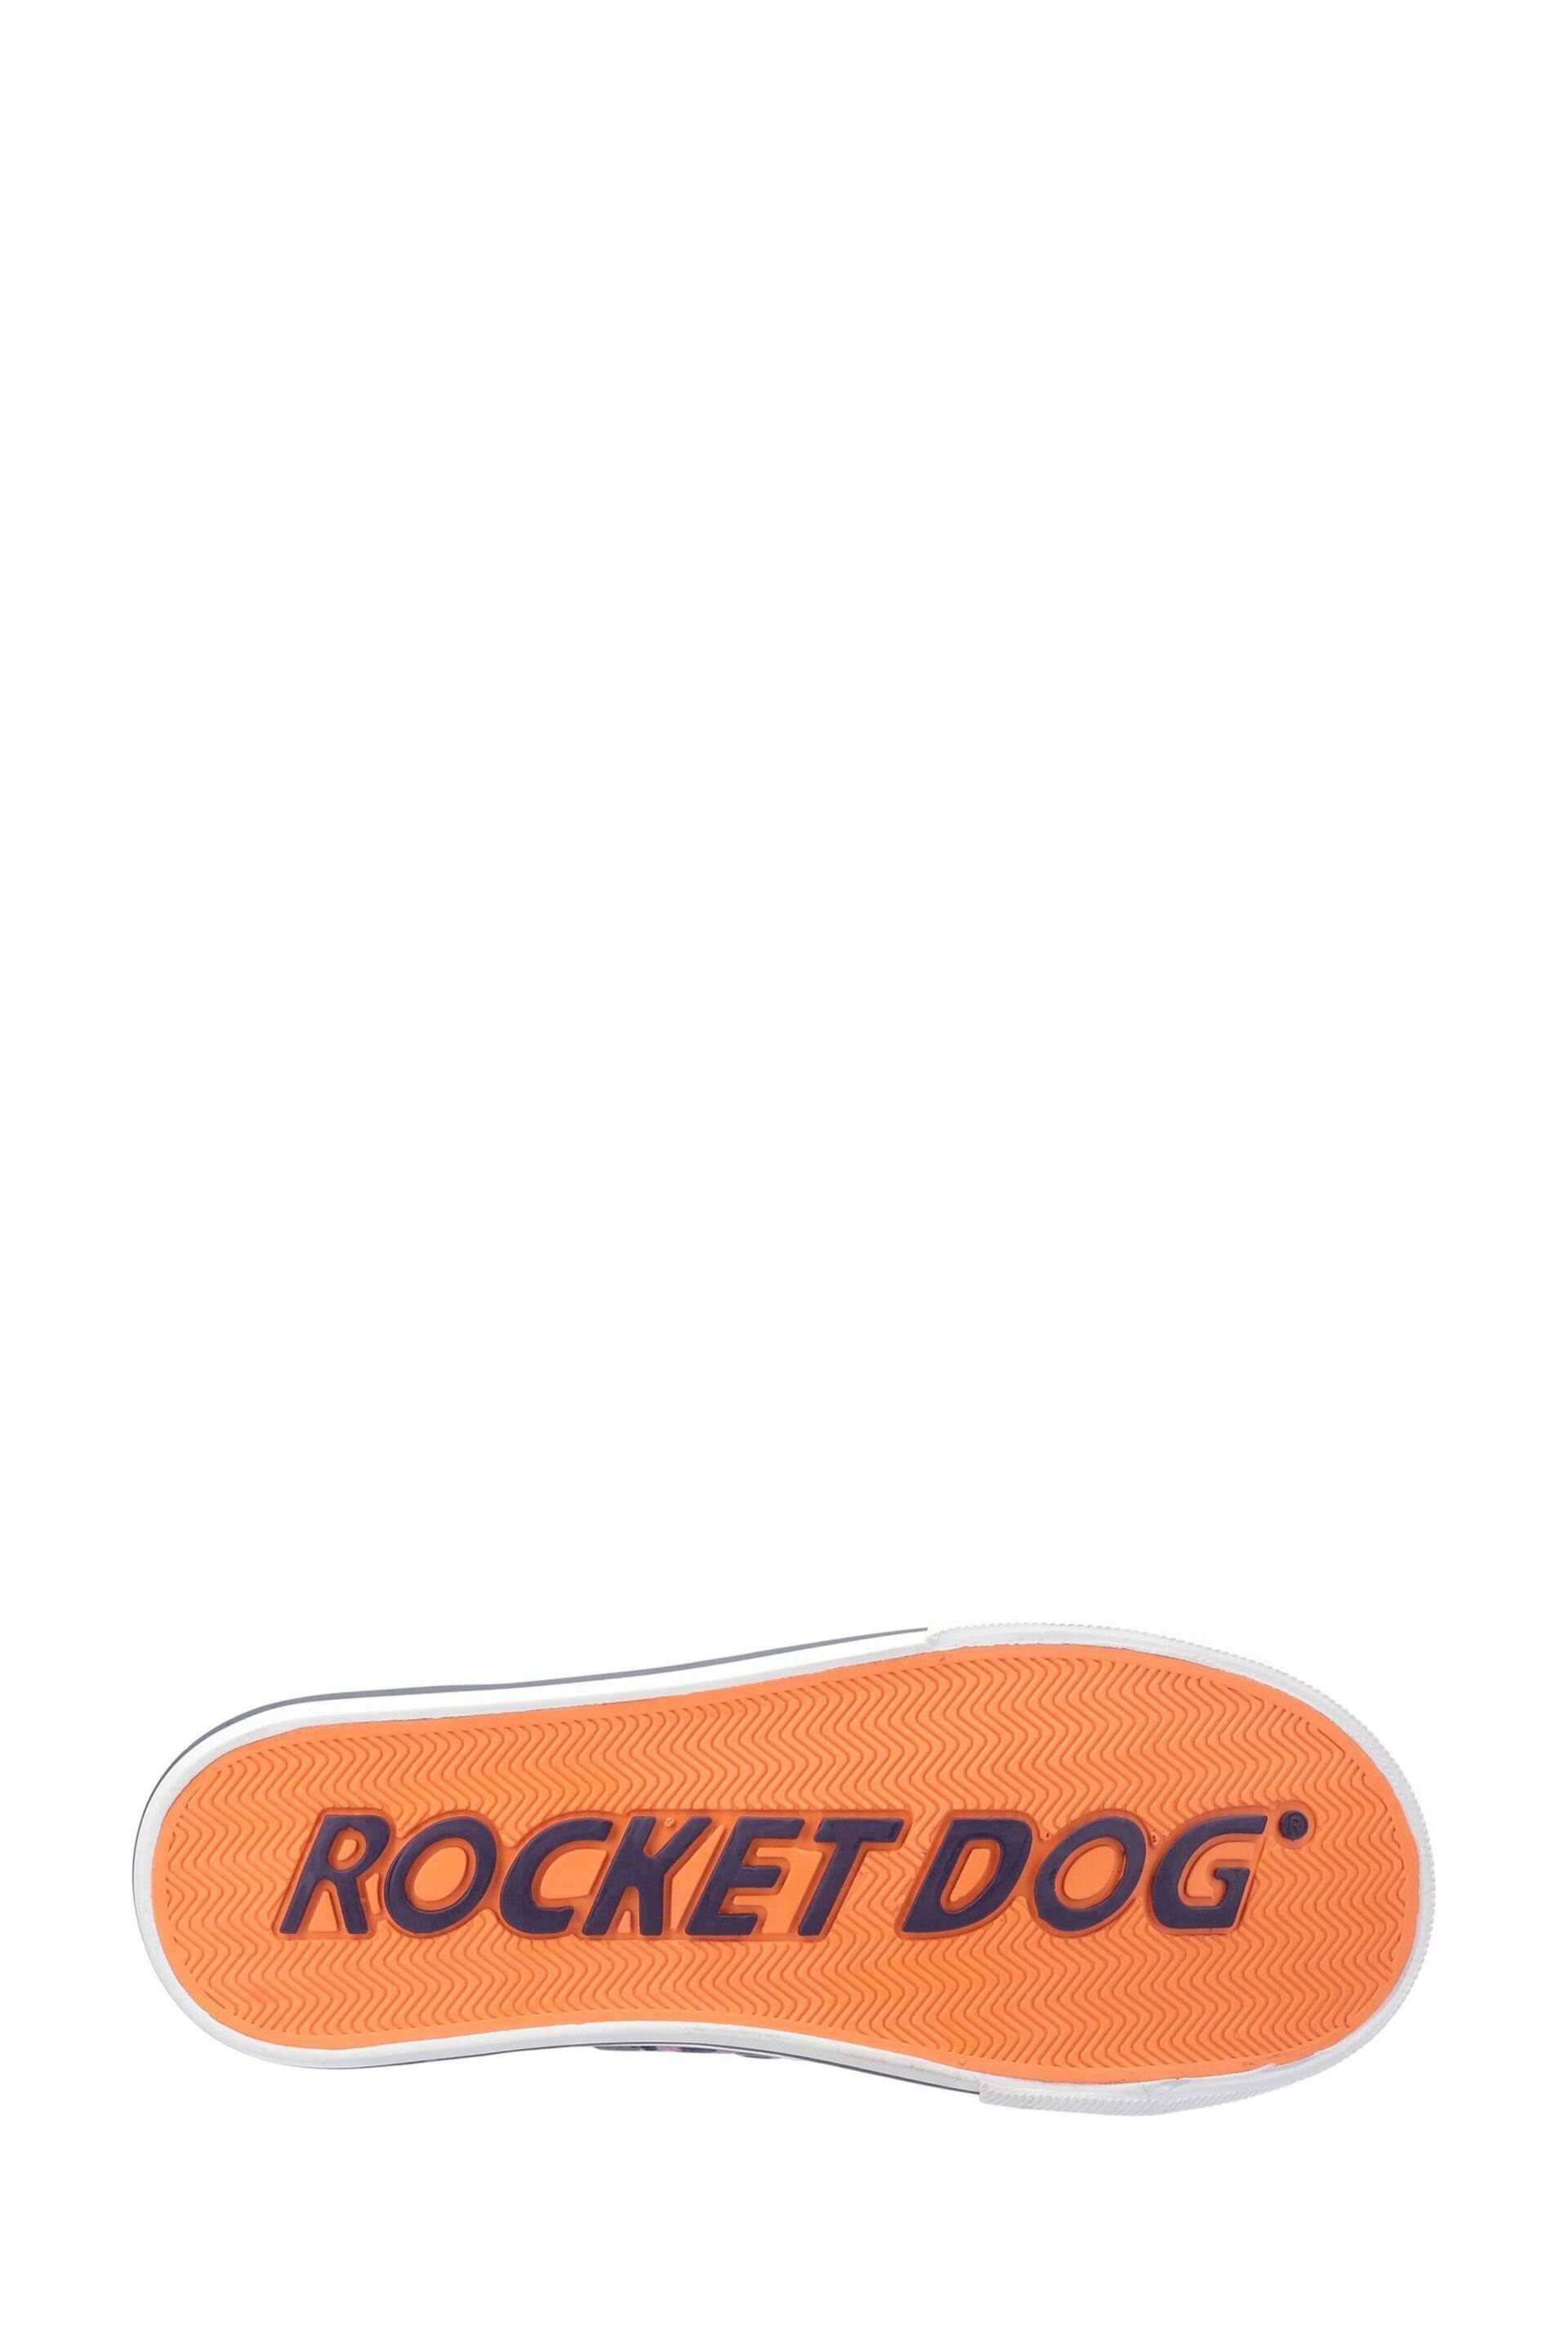 Rocket Dog Jazzin Eden Lace-Up Trainers - Image 4 of 4